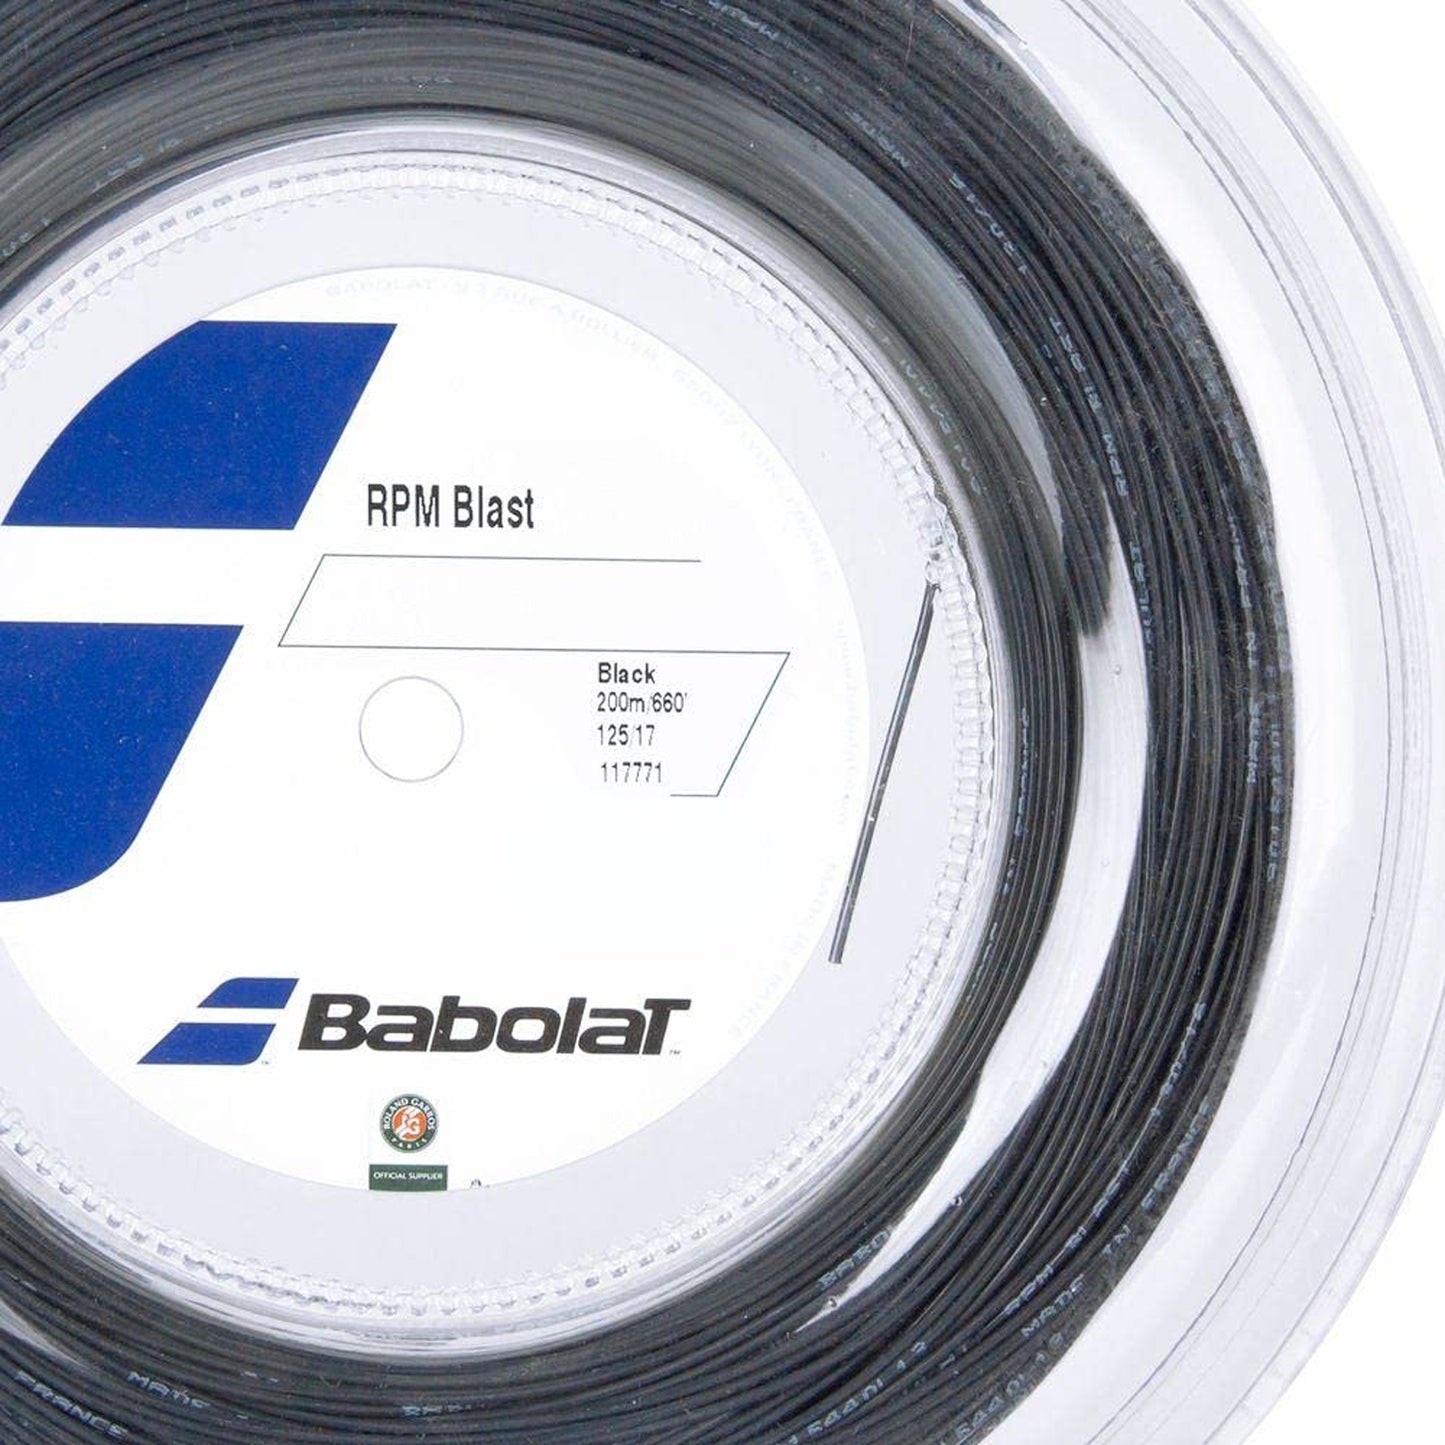 Babolat RPM Blast Tennis String Reel - Black - Best Price online Prokicksports.com